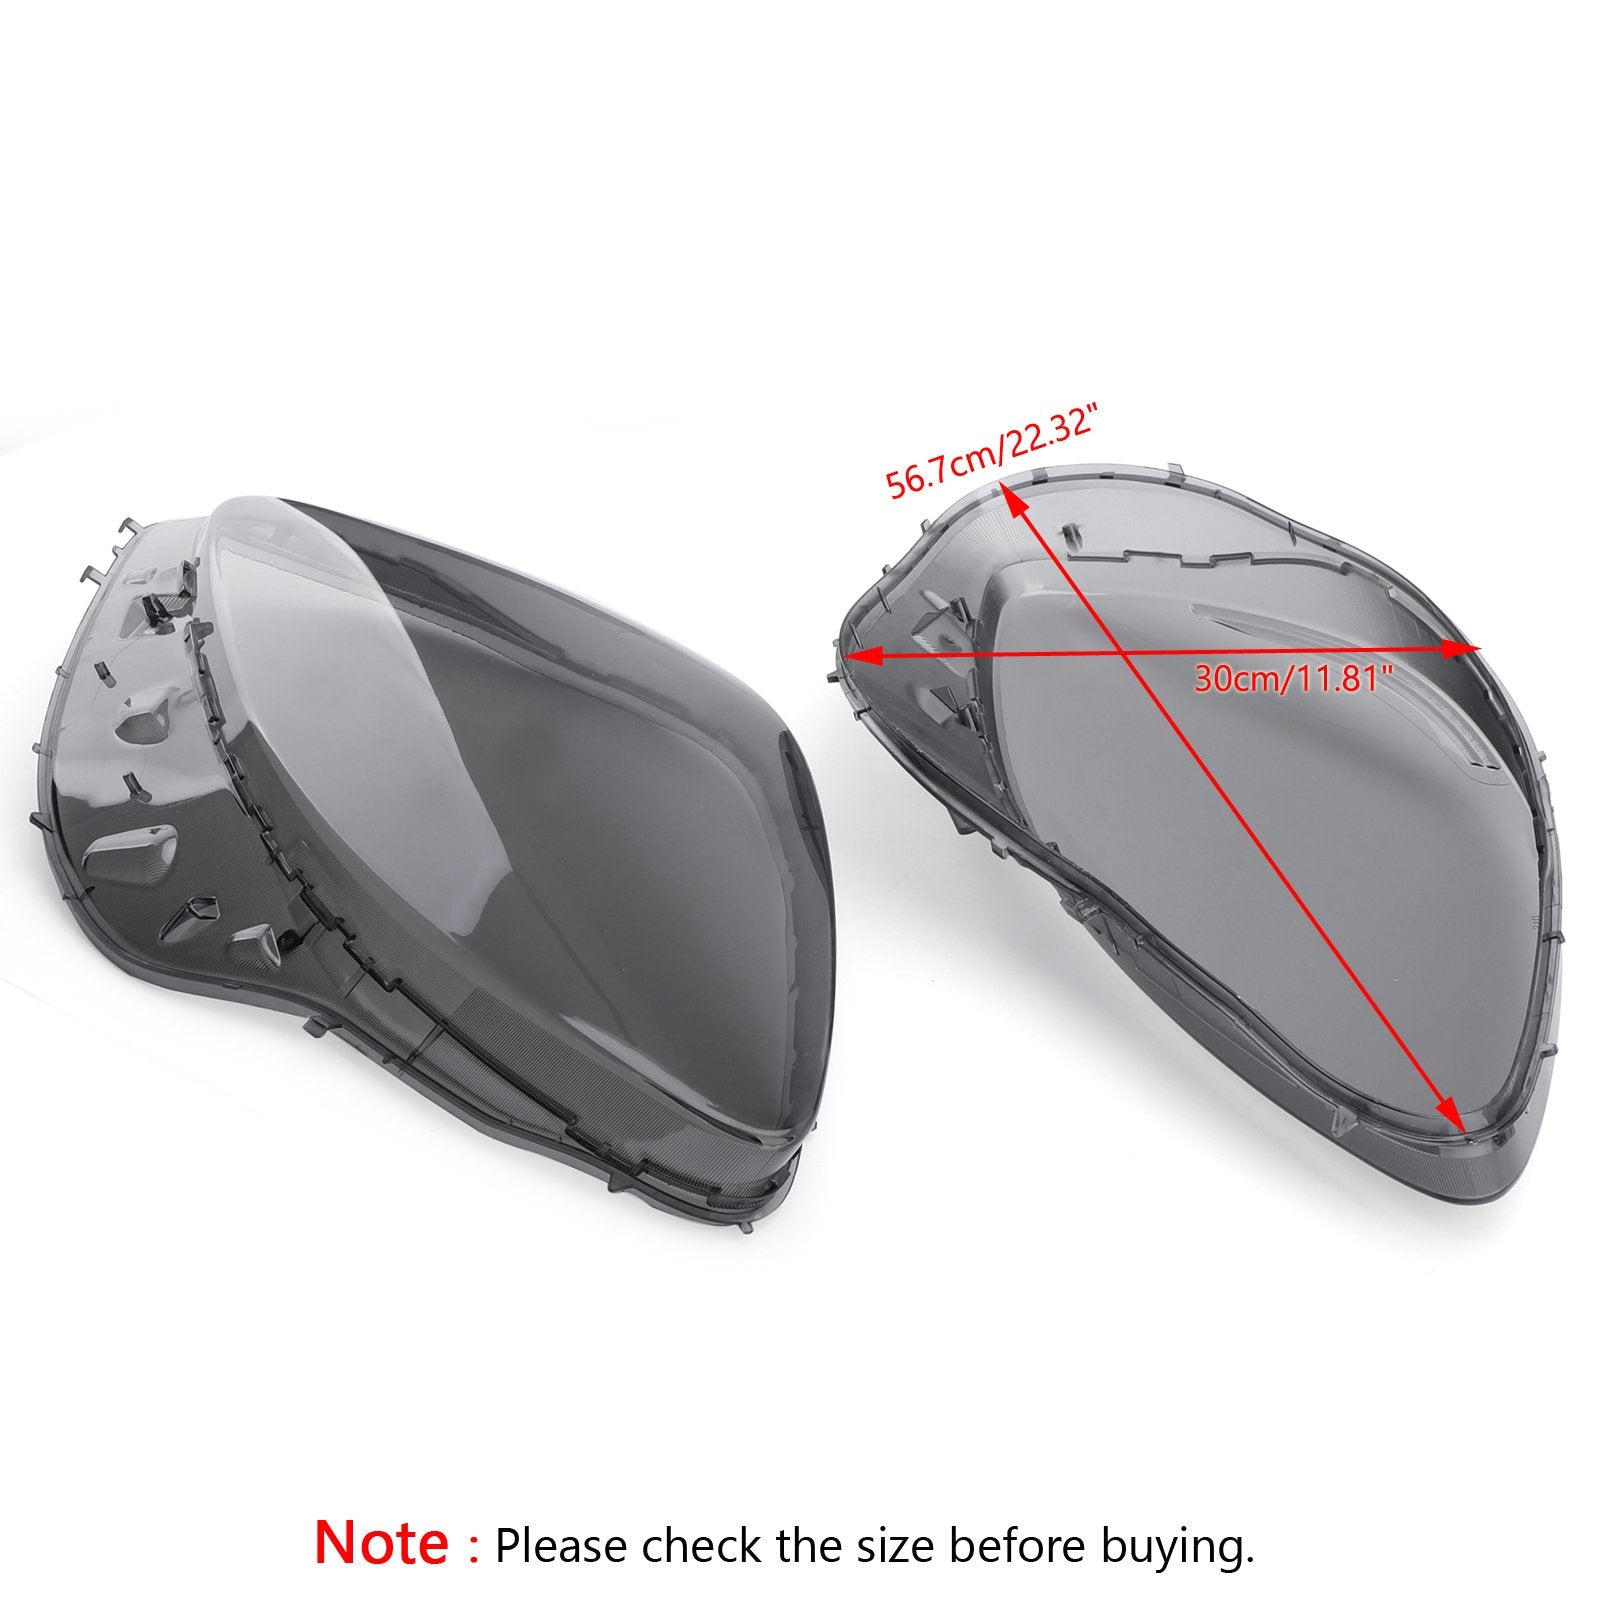 Smoke Headlight Lens Replacement & Black Gaskets Trim Kit For 05-13 C6 Corvette